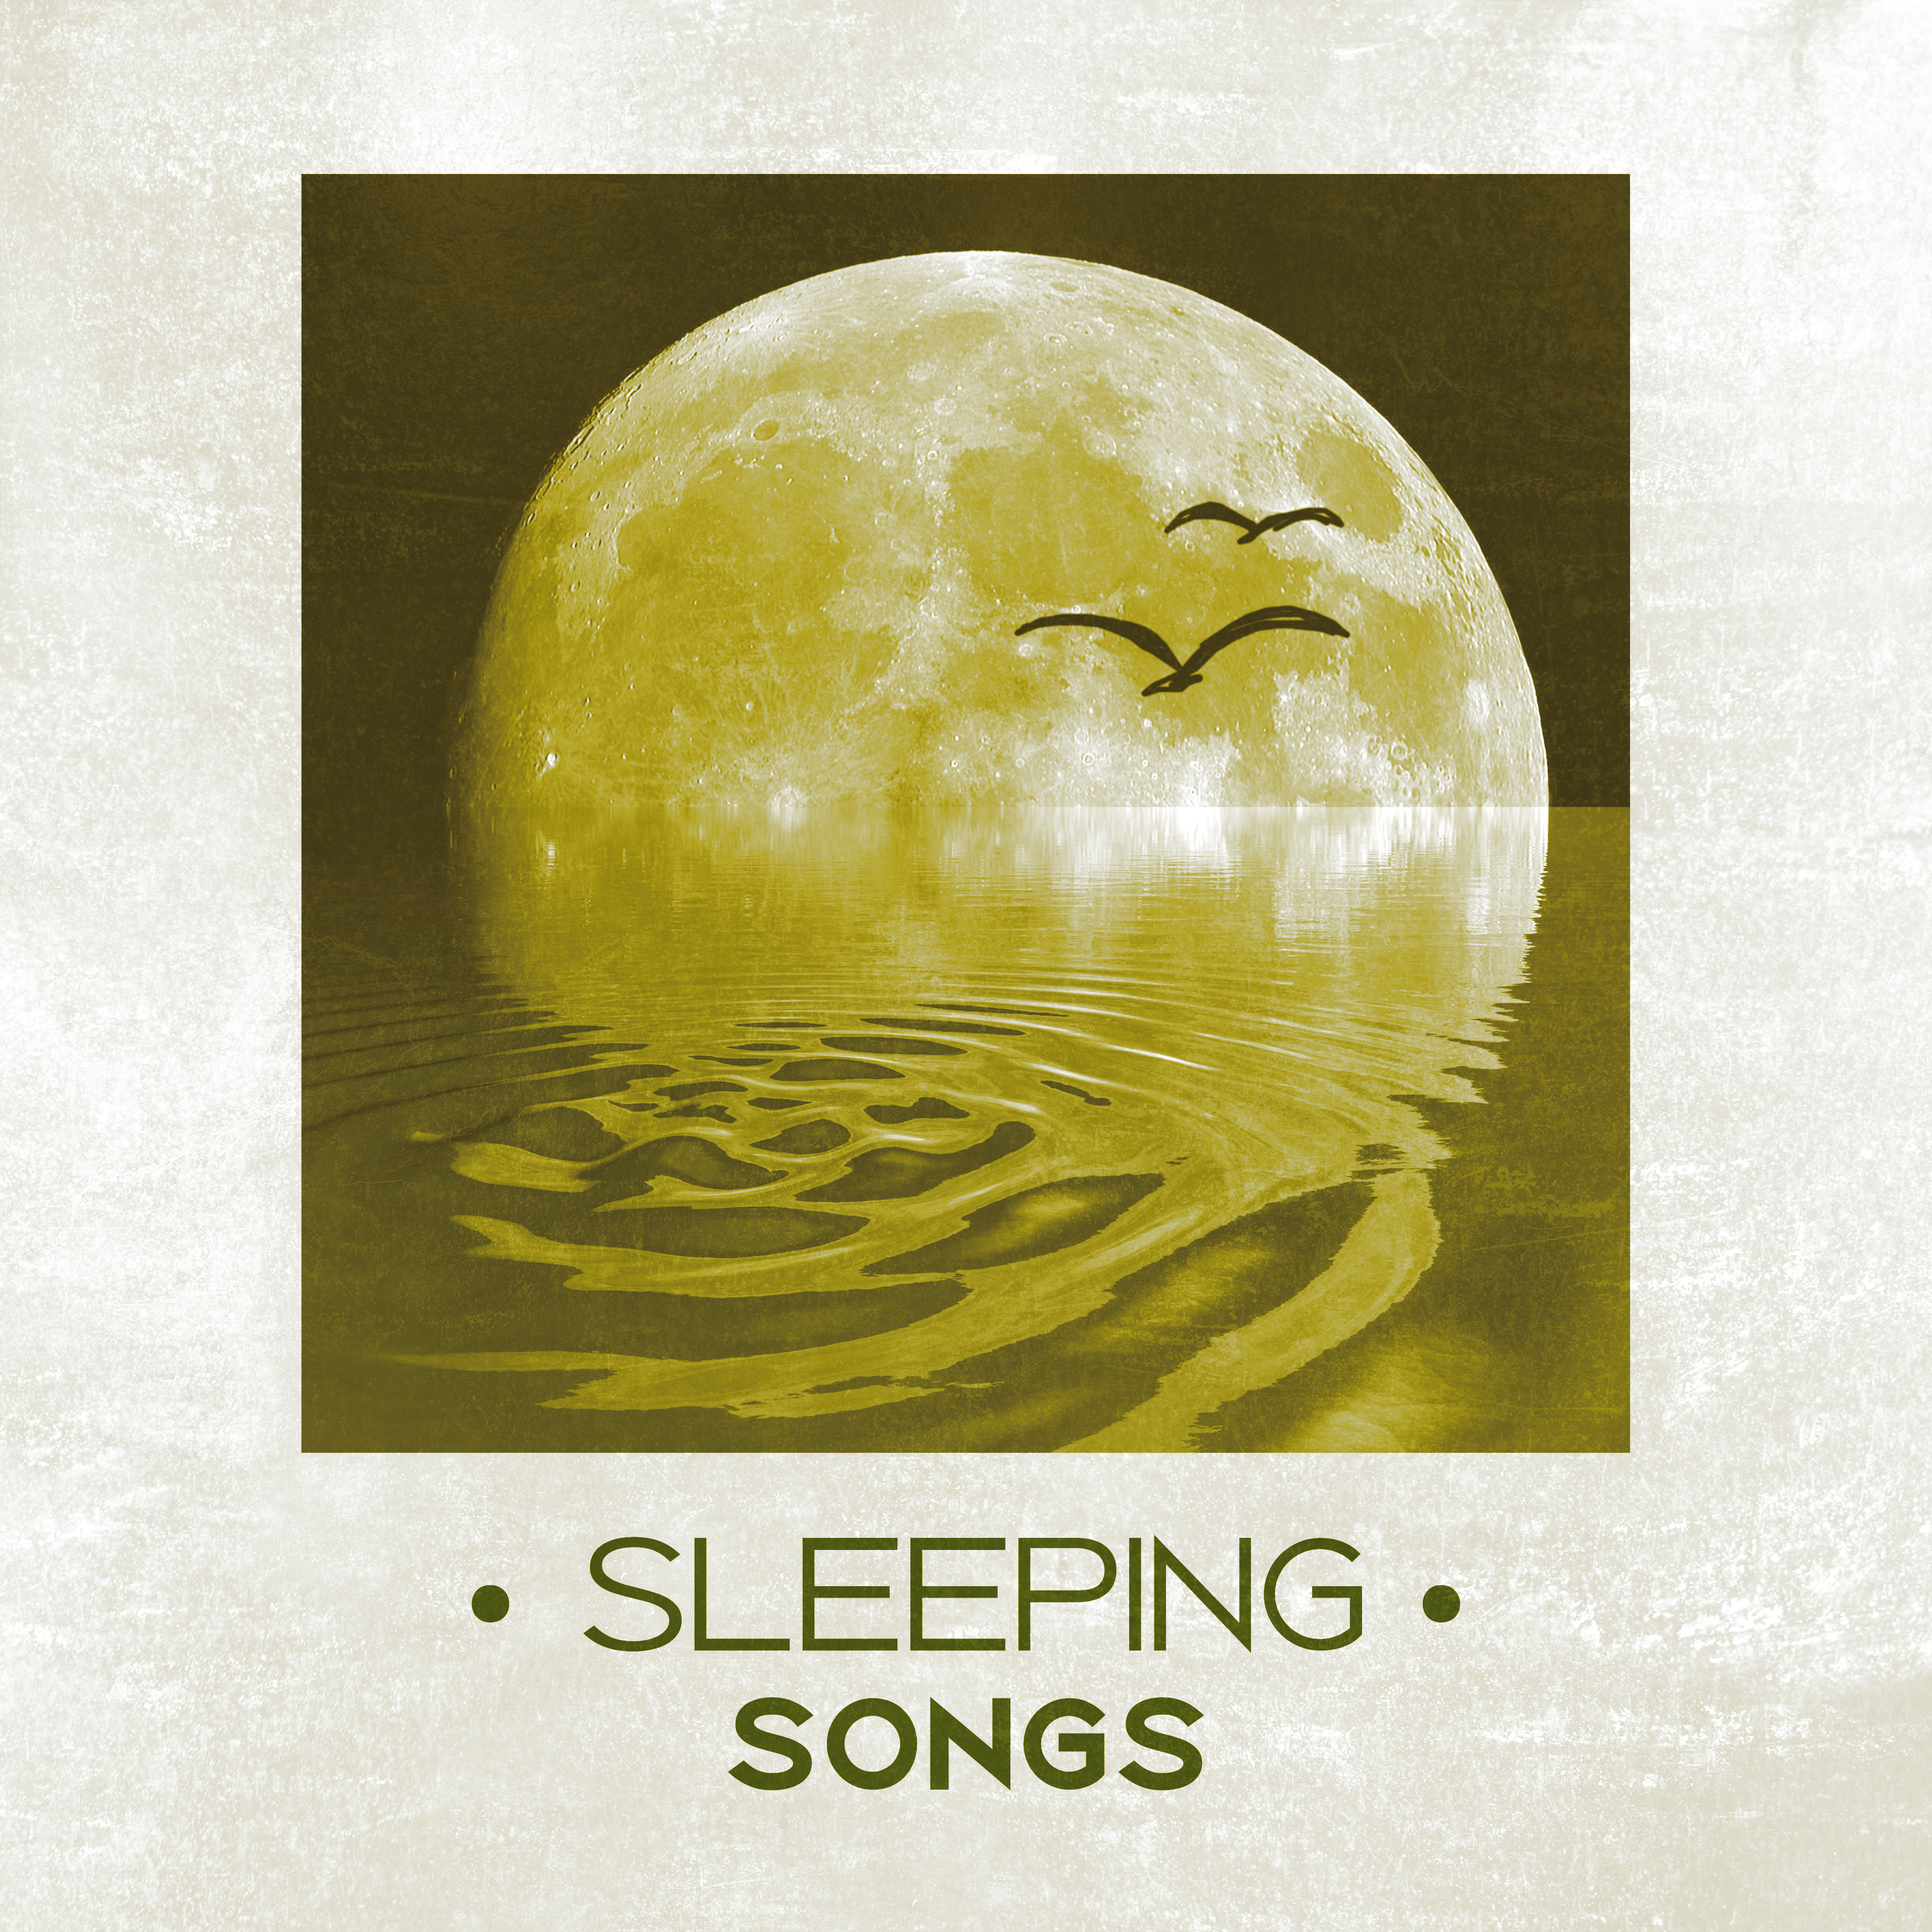 Sleeping Songs – Relaxing Music for Sleep, Restful Sleep, Deep Sleep, Easy Sleep, Nap Time Music, Calming Nature